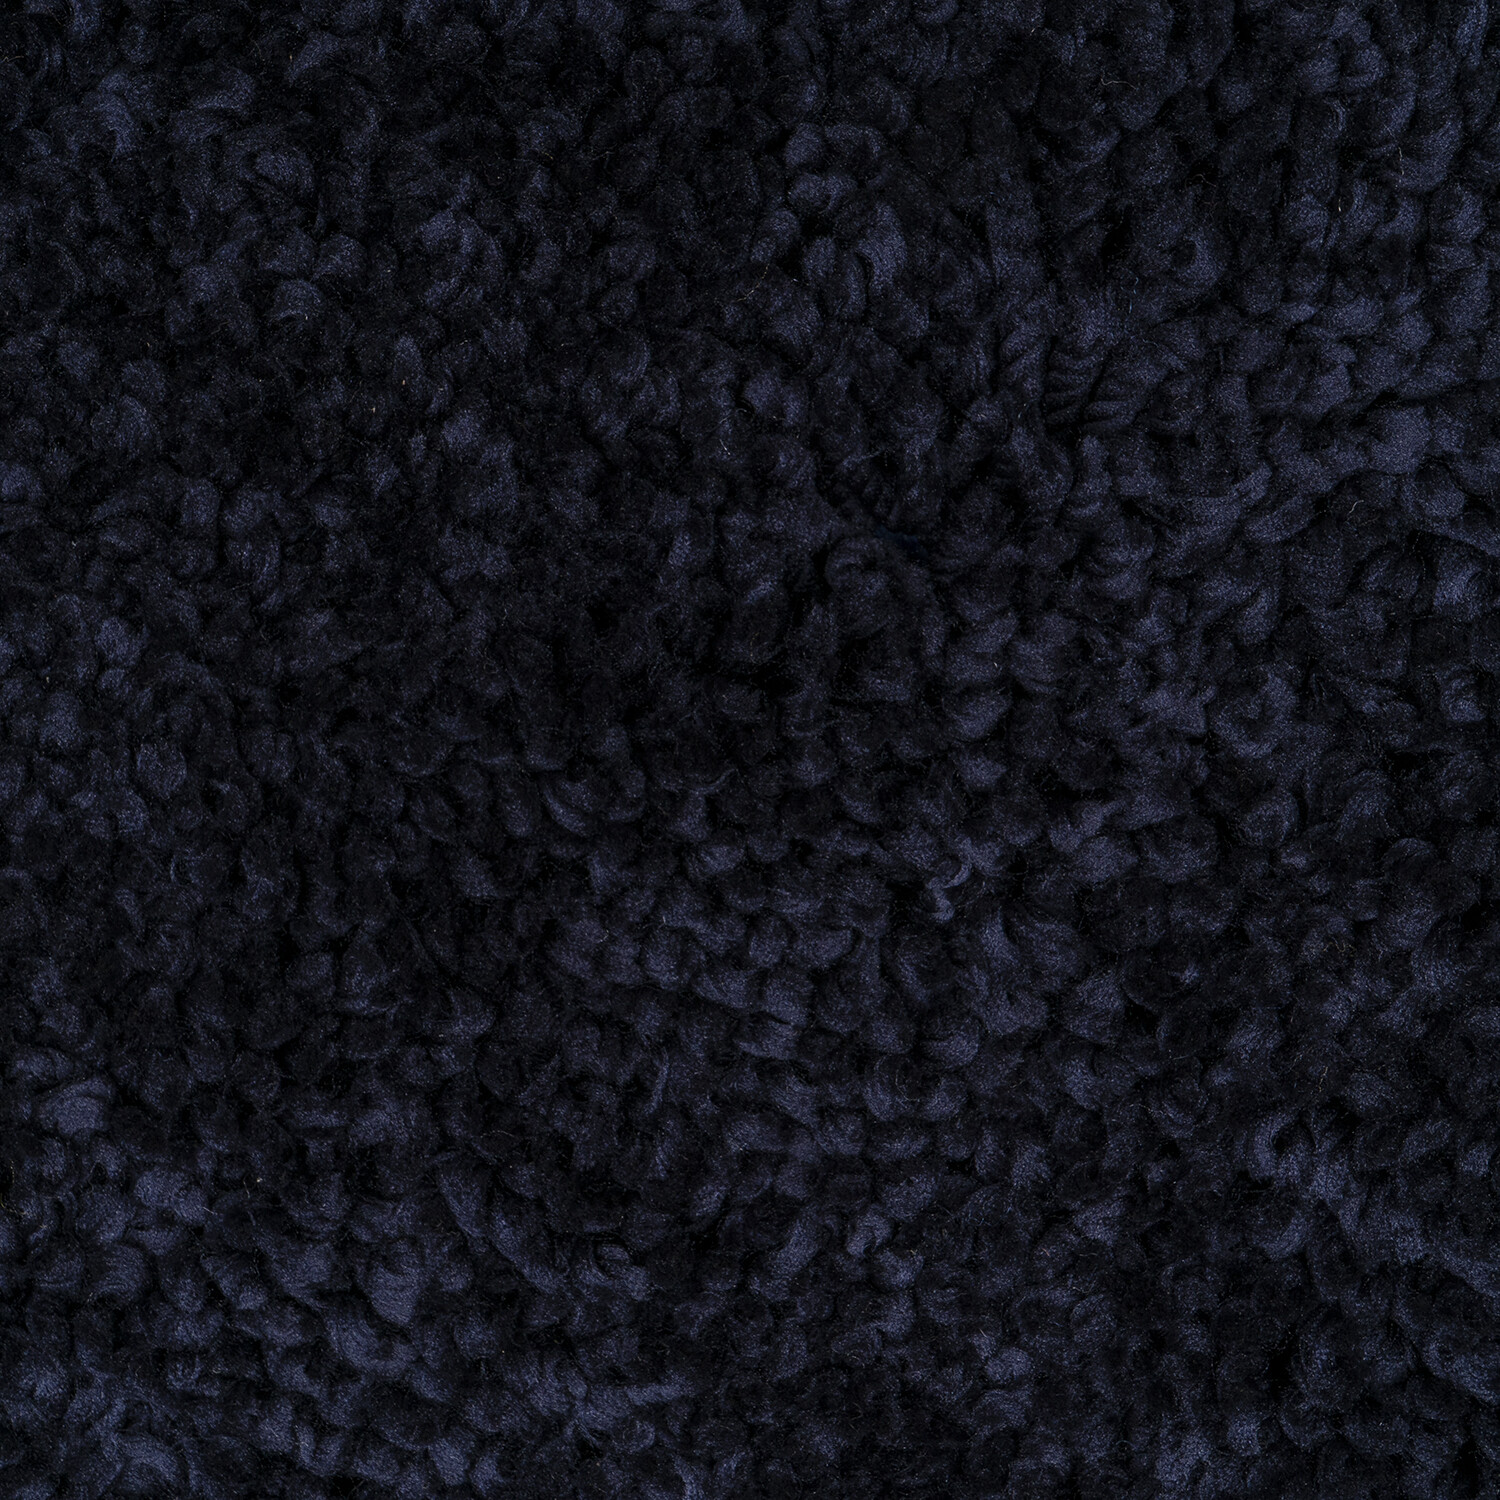 Alaska Dark Blue Shaggy Rug Medium 120 x 180cm Image 2